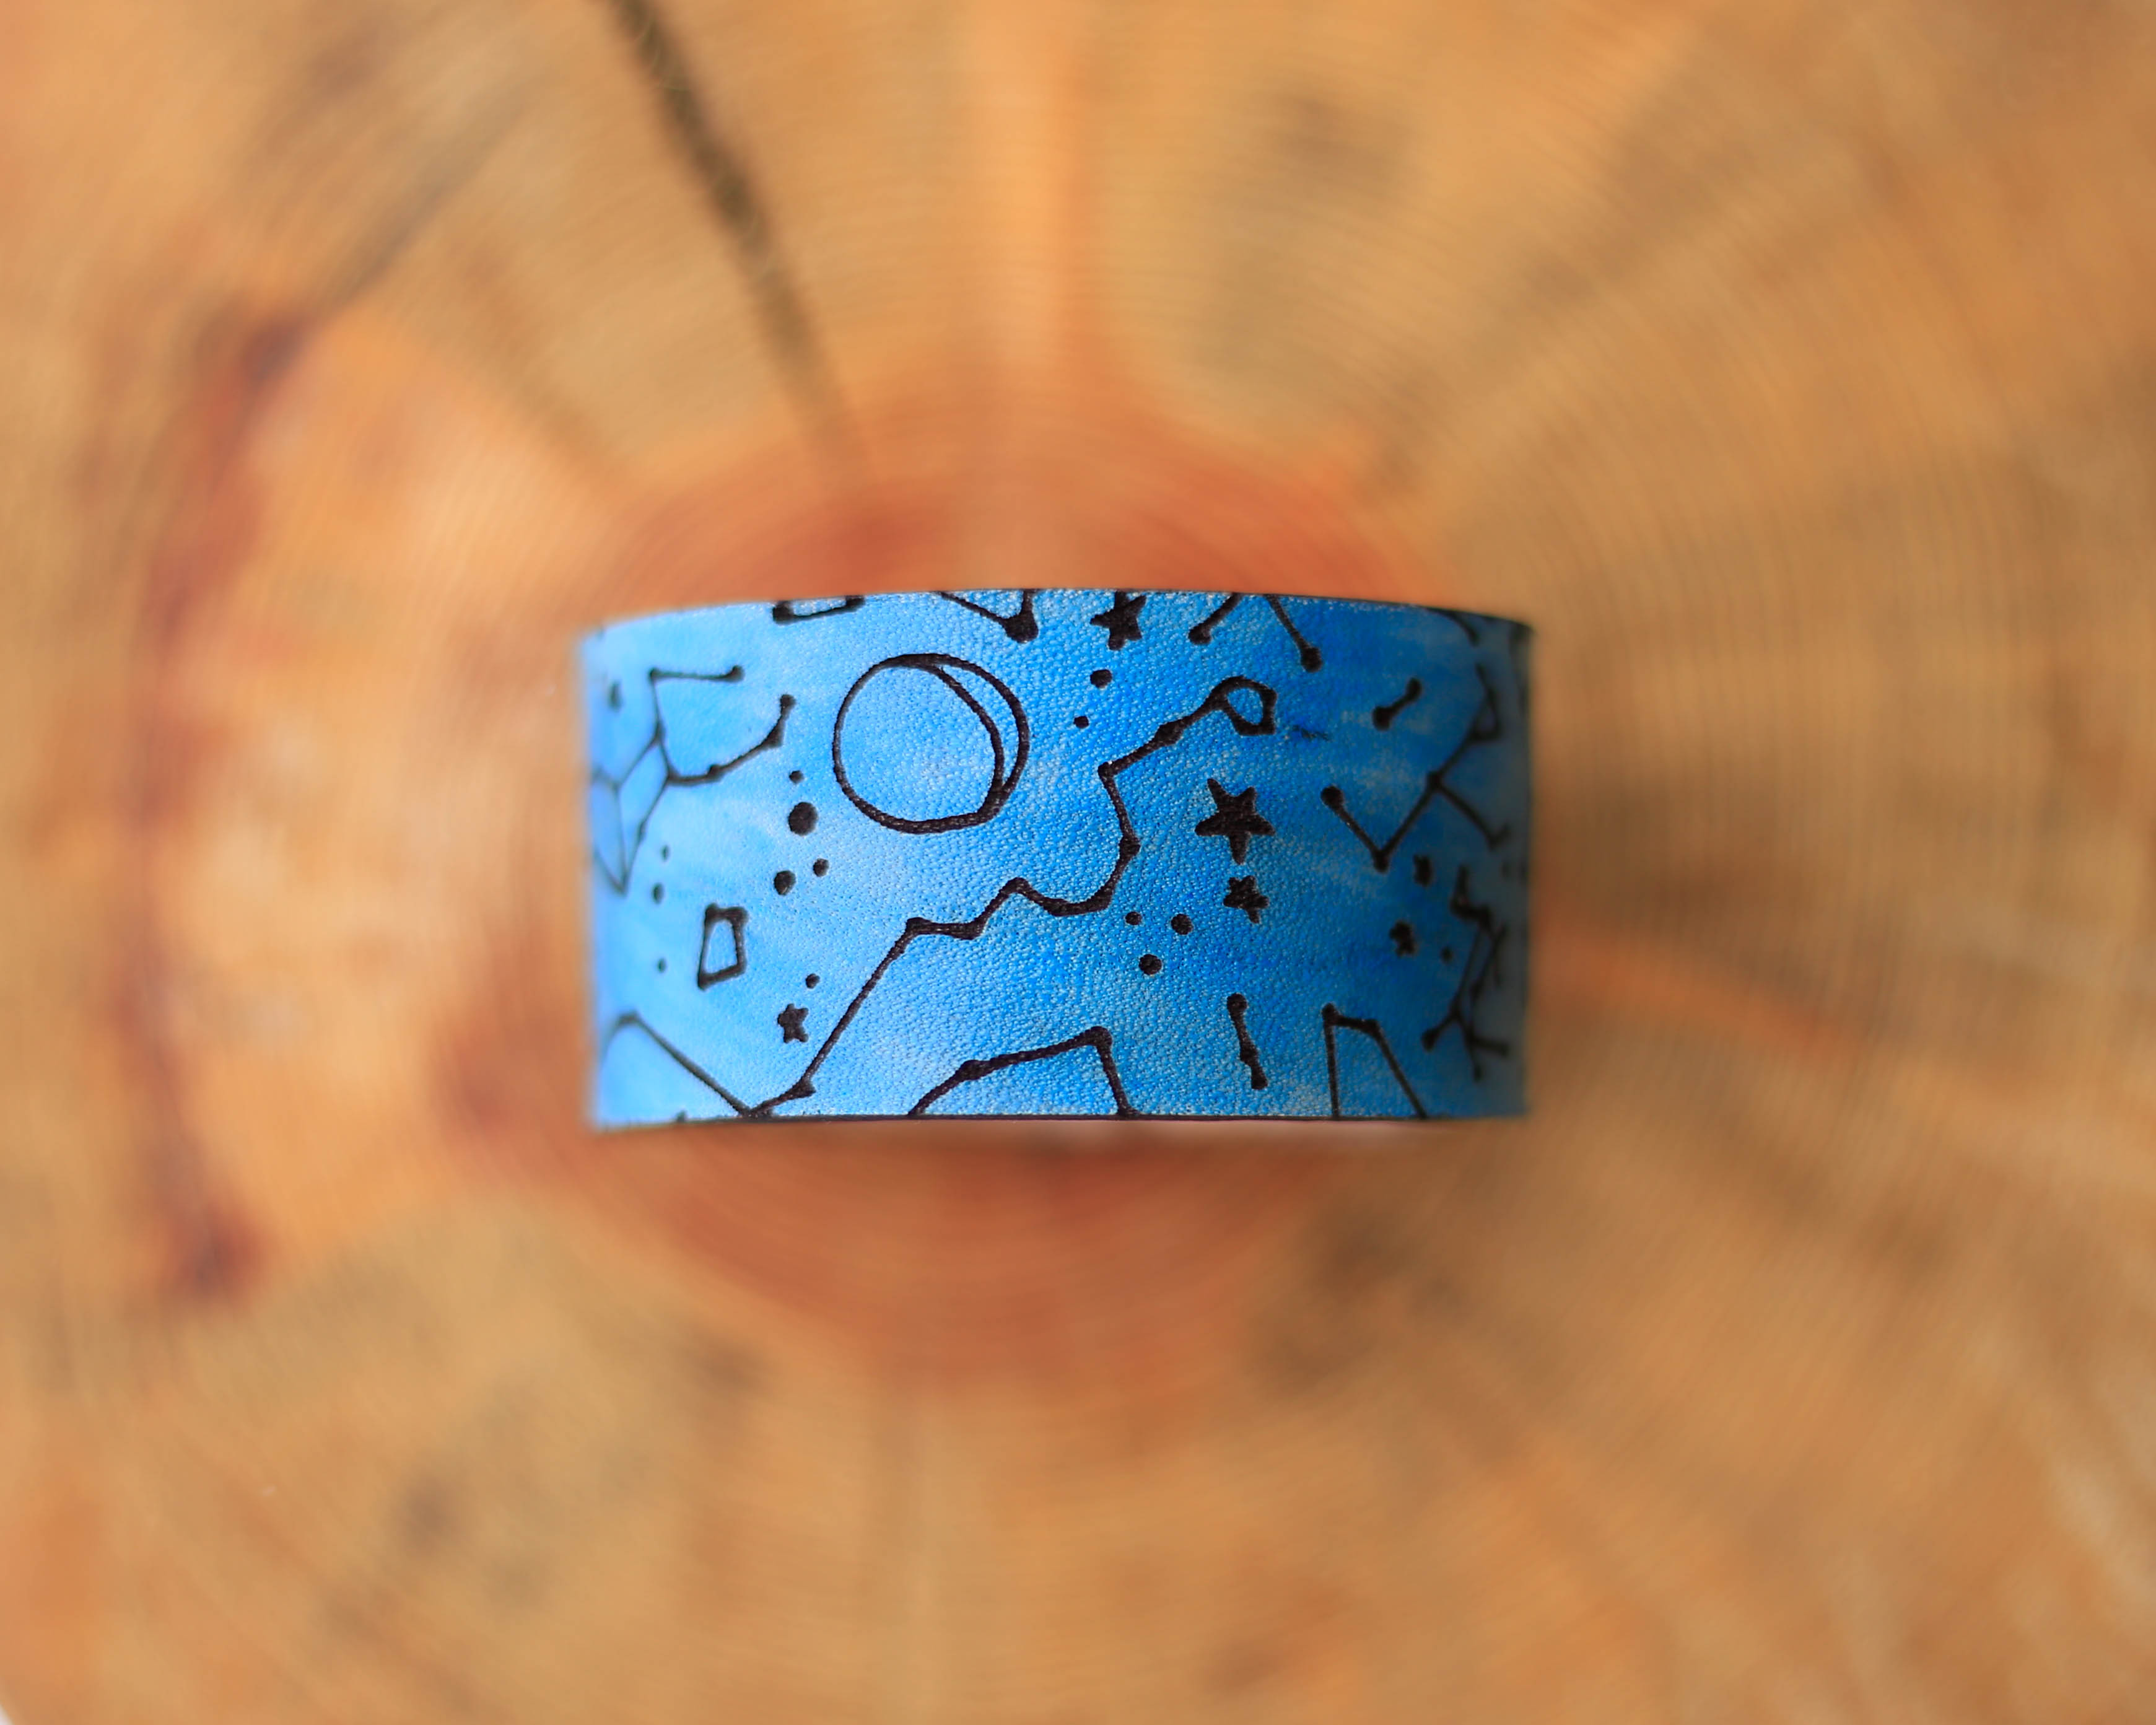 The Blue Star Collection bracelet